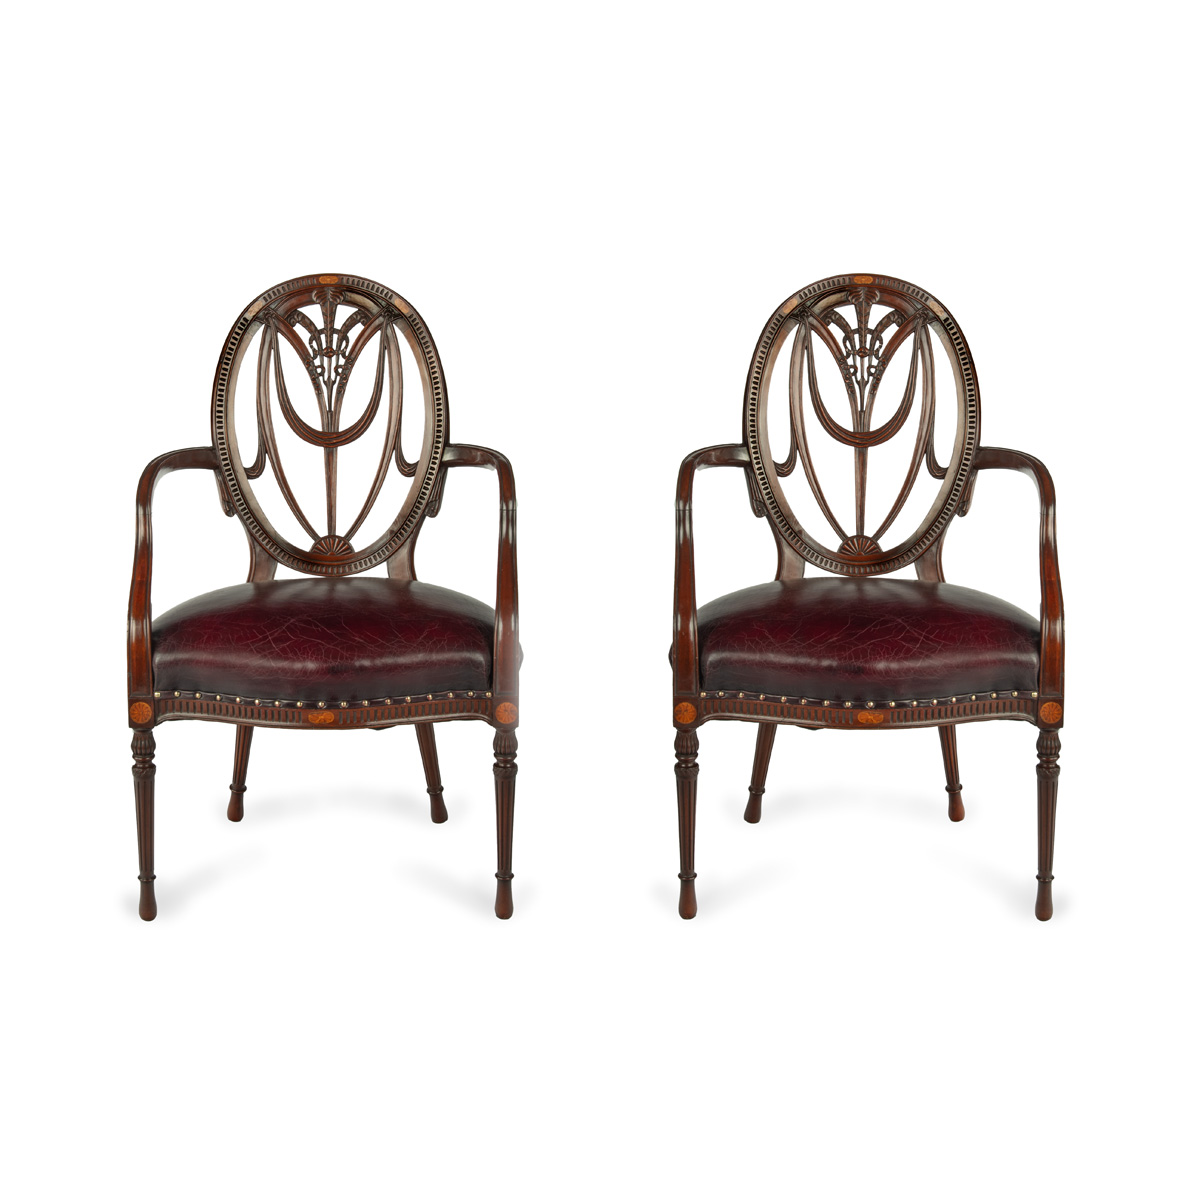 A pair mahogany Hepplewhite style arm chairs,